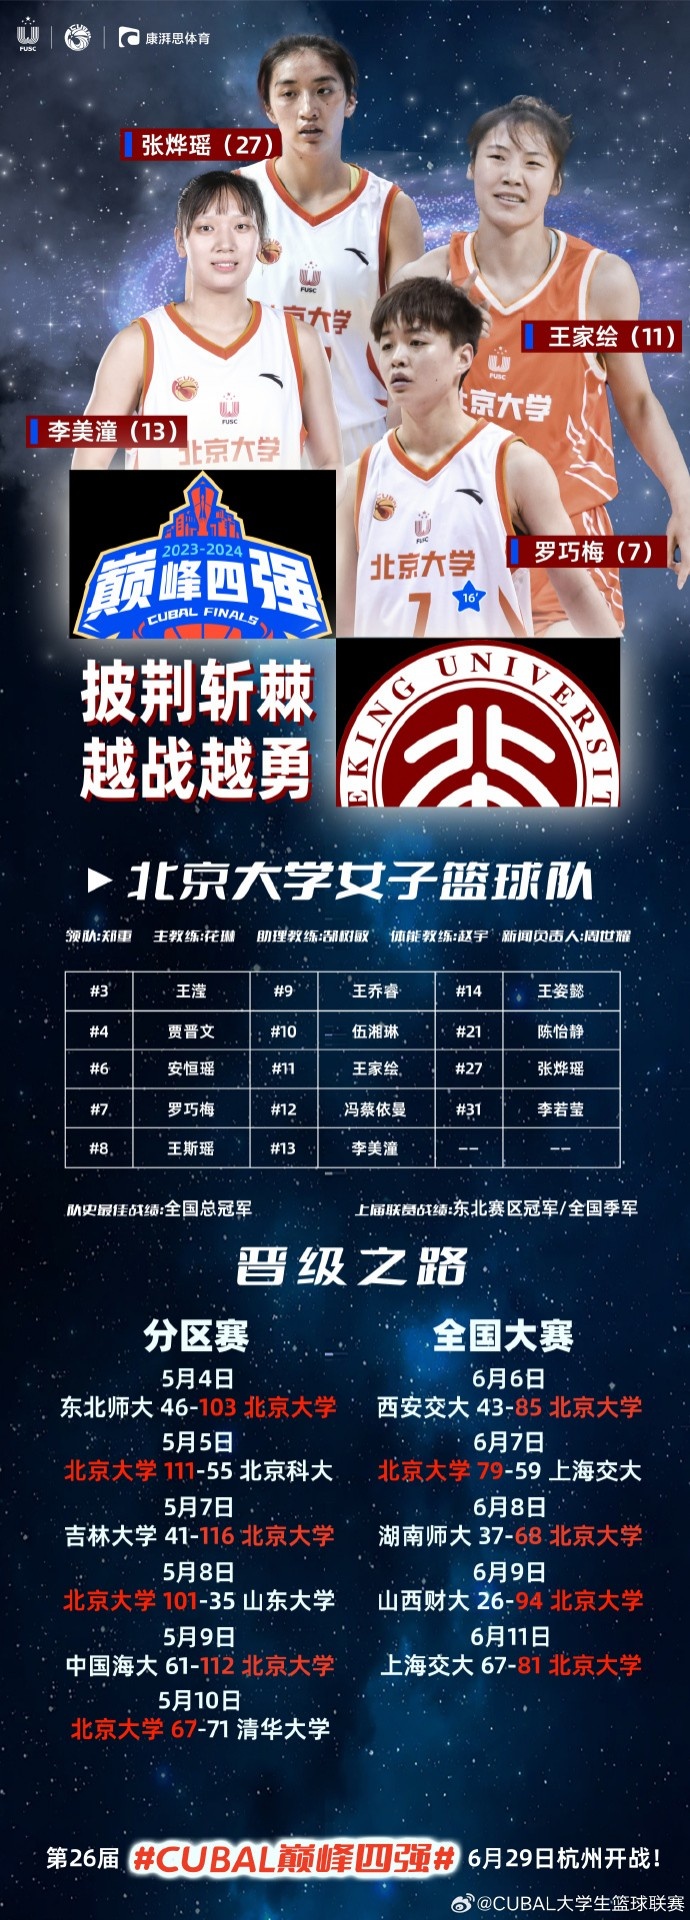 CUBAL巅峰四强巡礼-北京大学女子篮球队